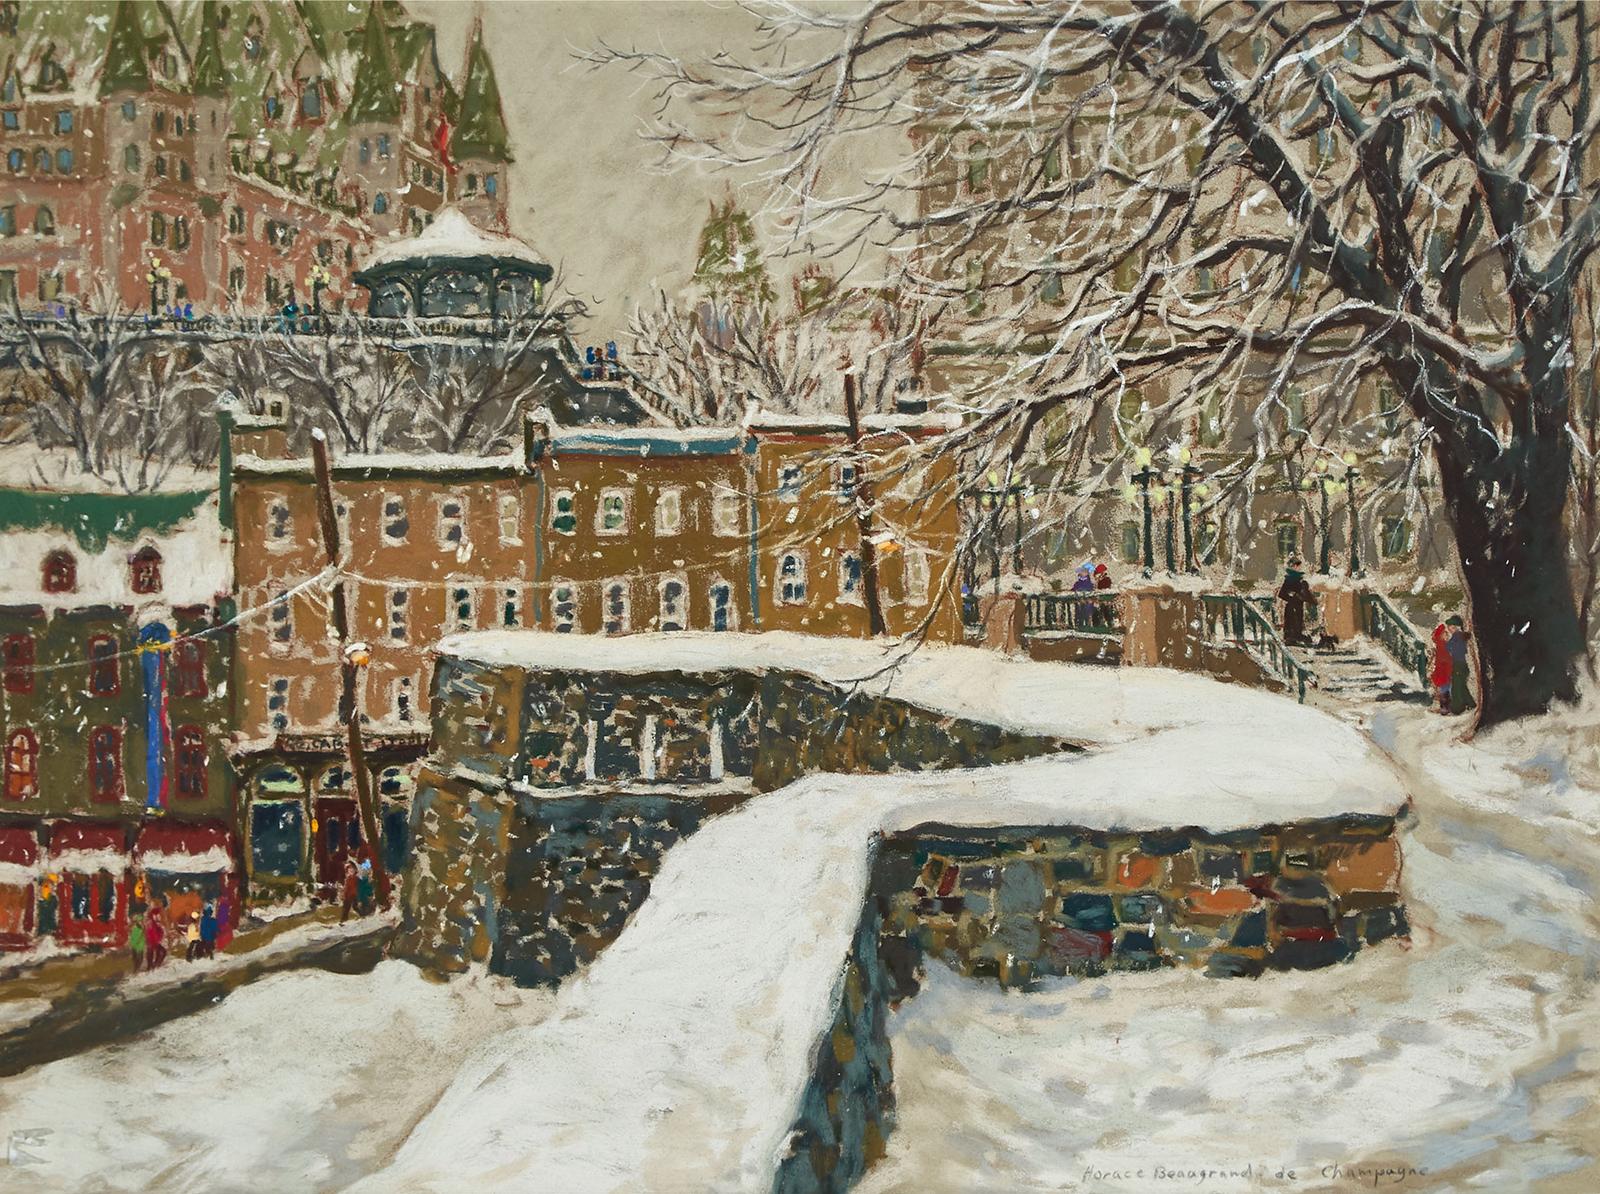 Horace Champagne (1937) - Fresh Falling Snow, Parc Morency (Château Frontenac), 1995